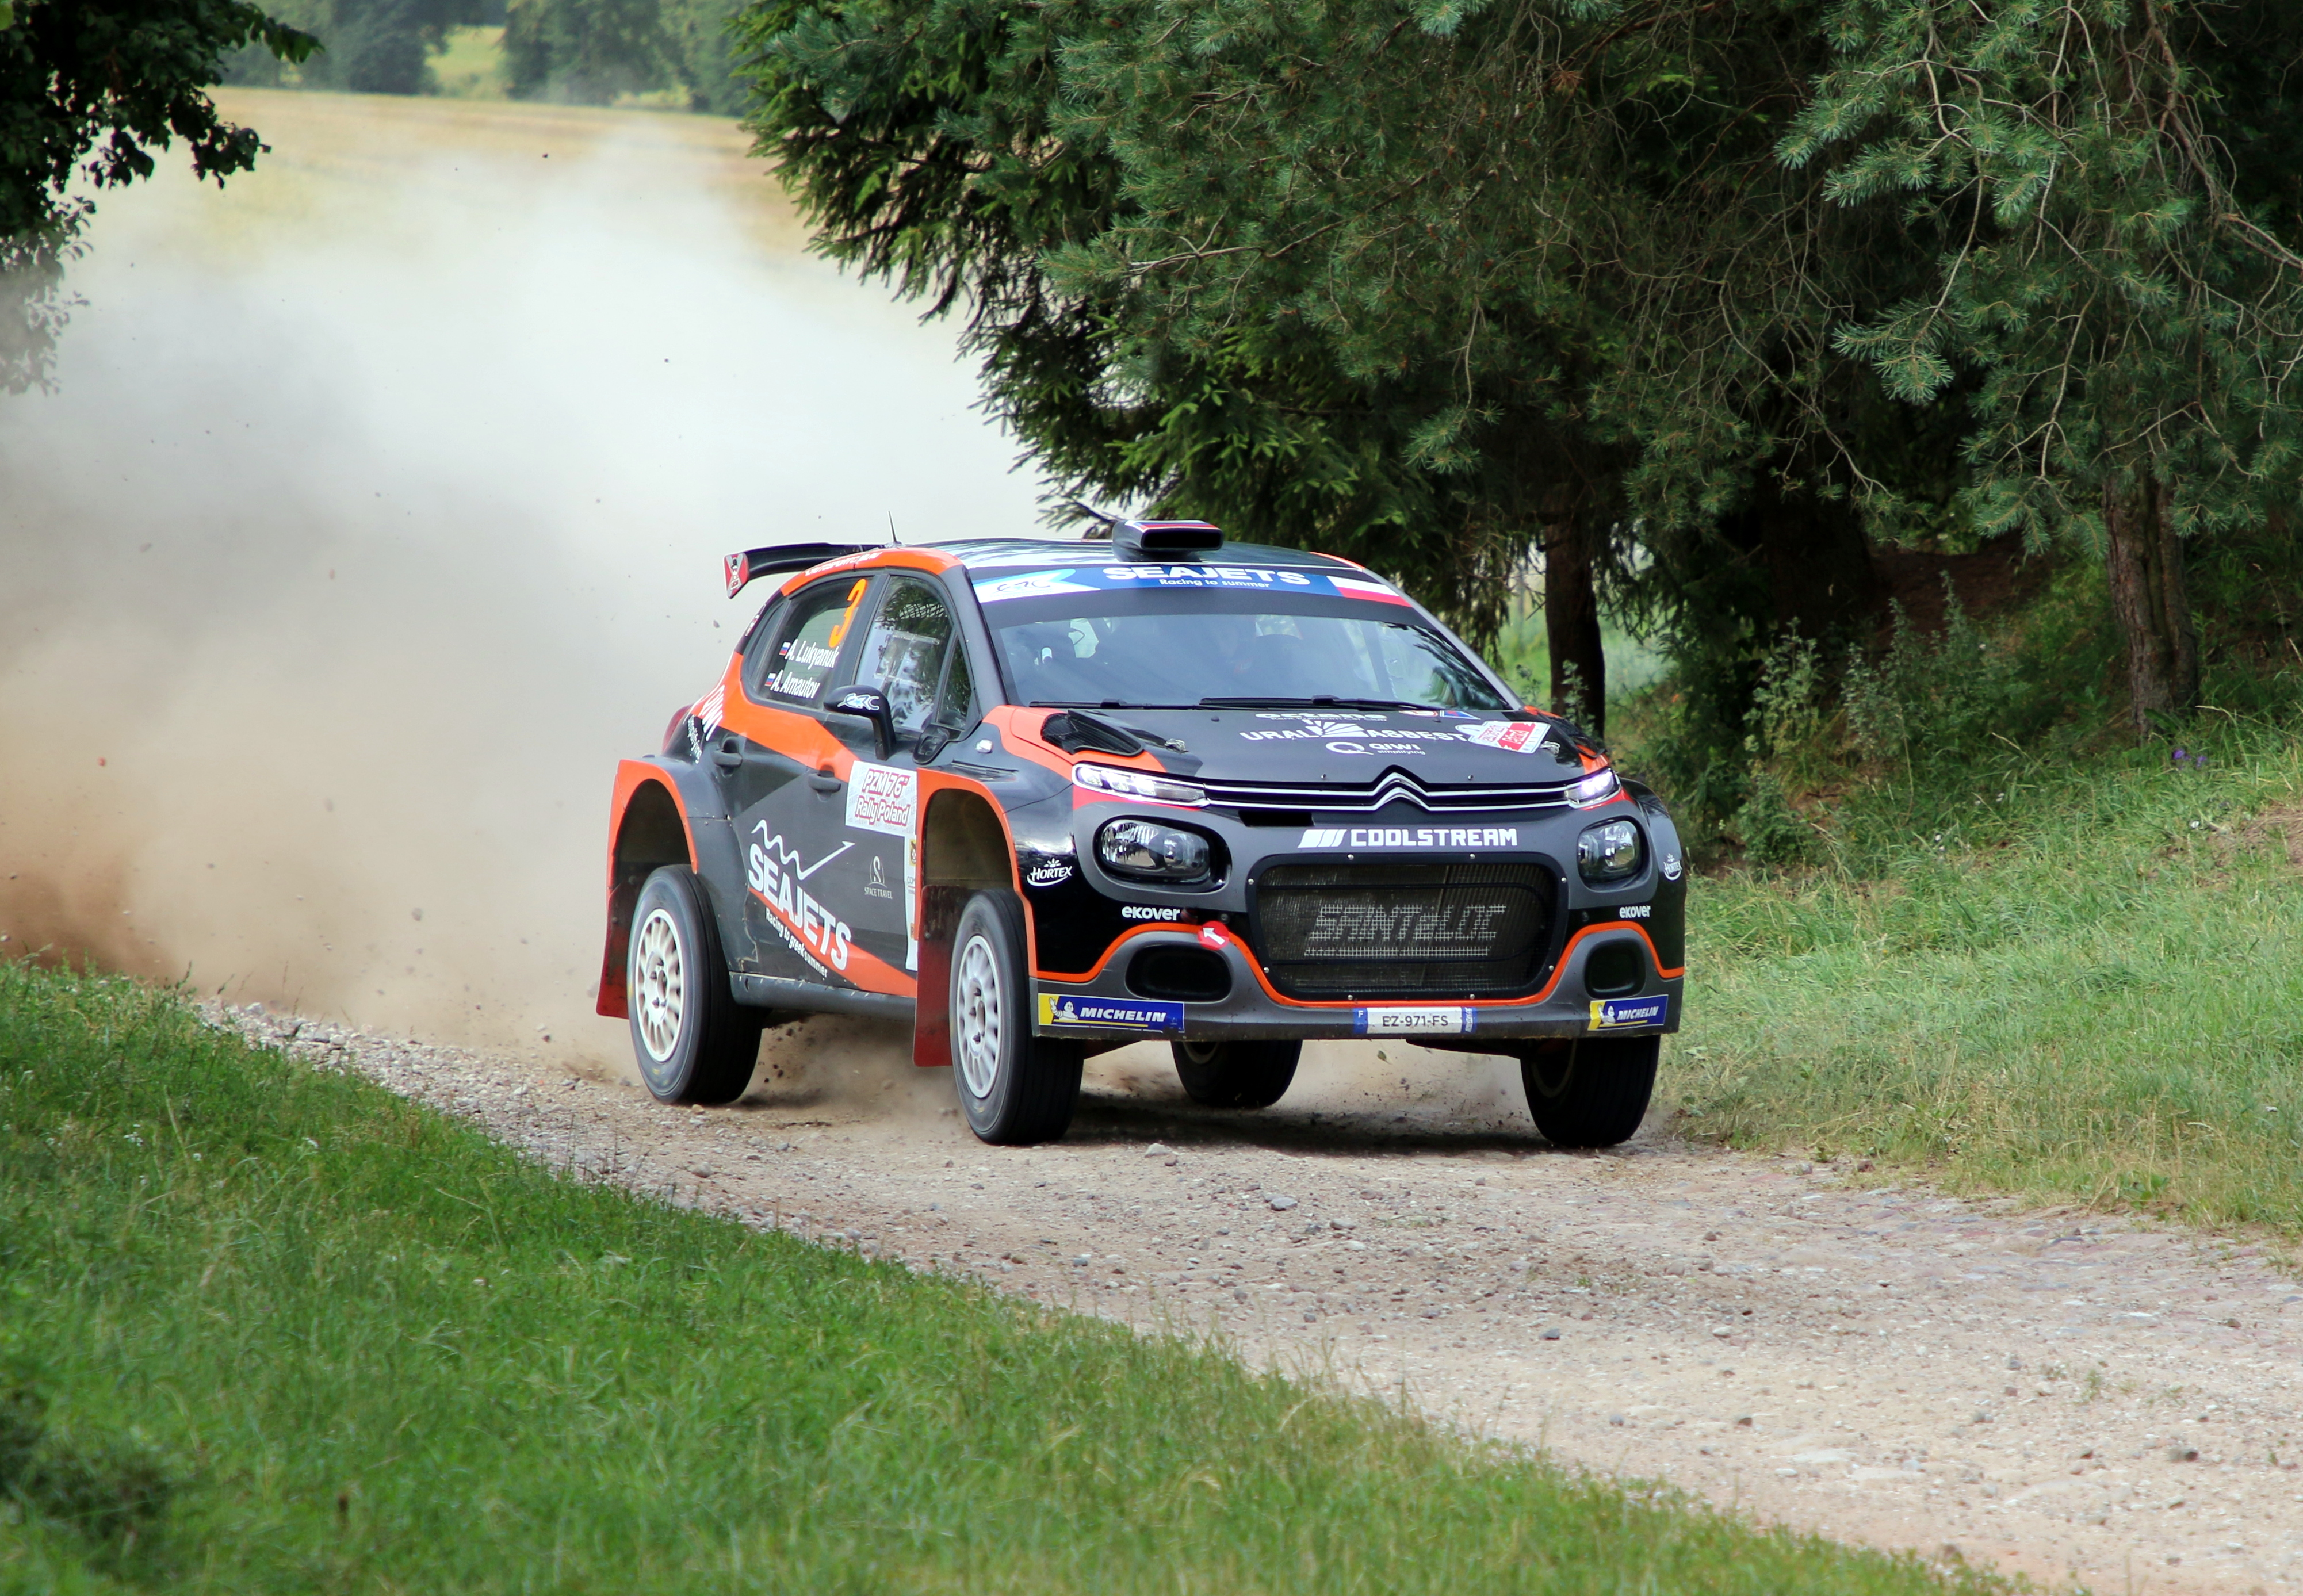 2019 European Rally Championship - Wikipedia